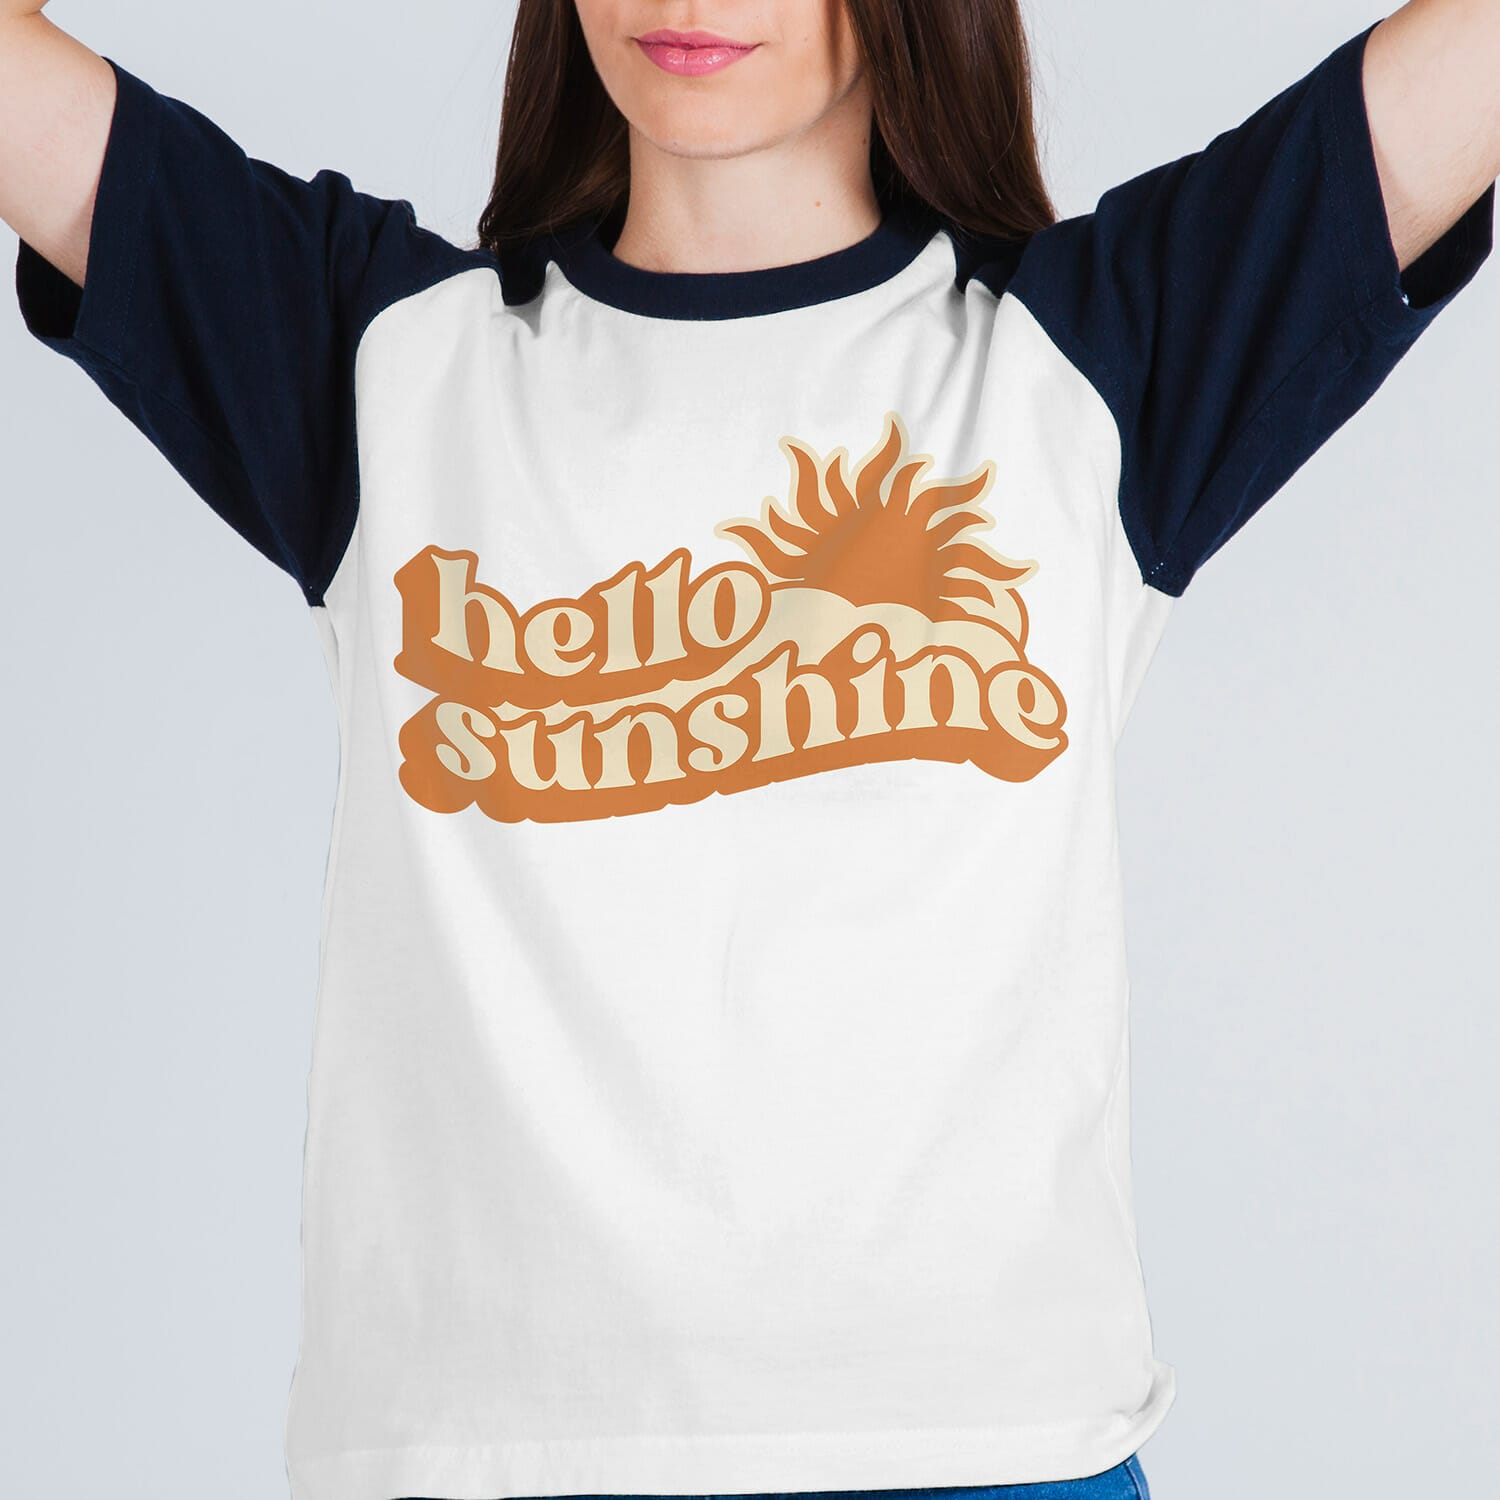 Hello sunshine tshirt design For Summer